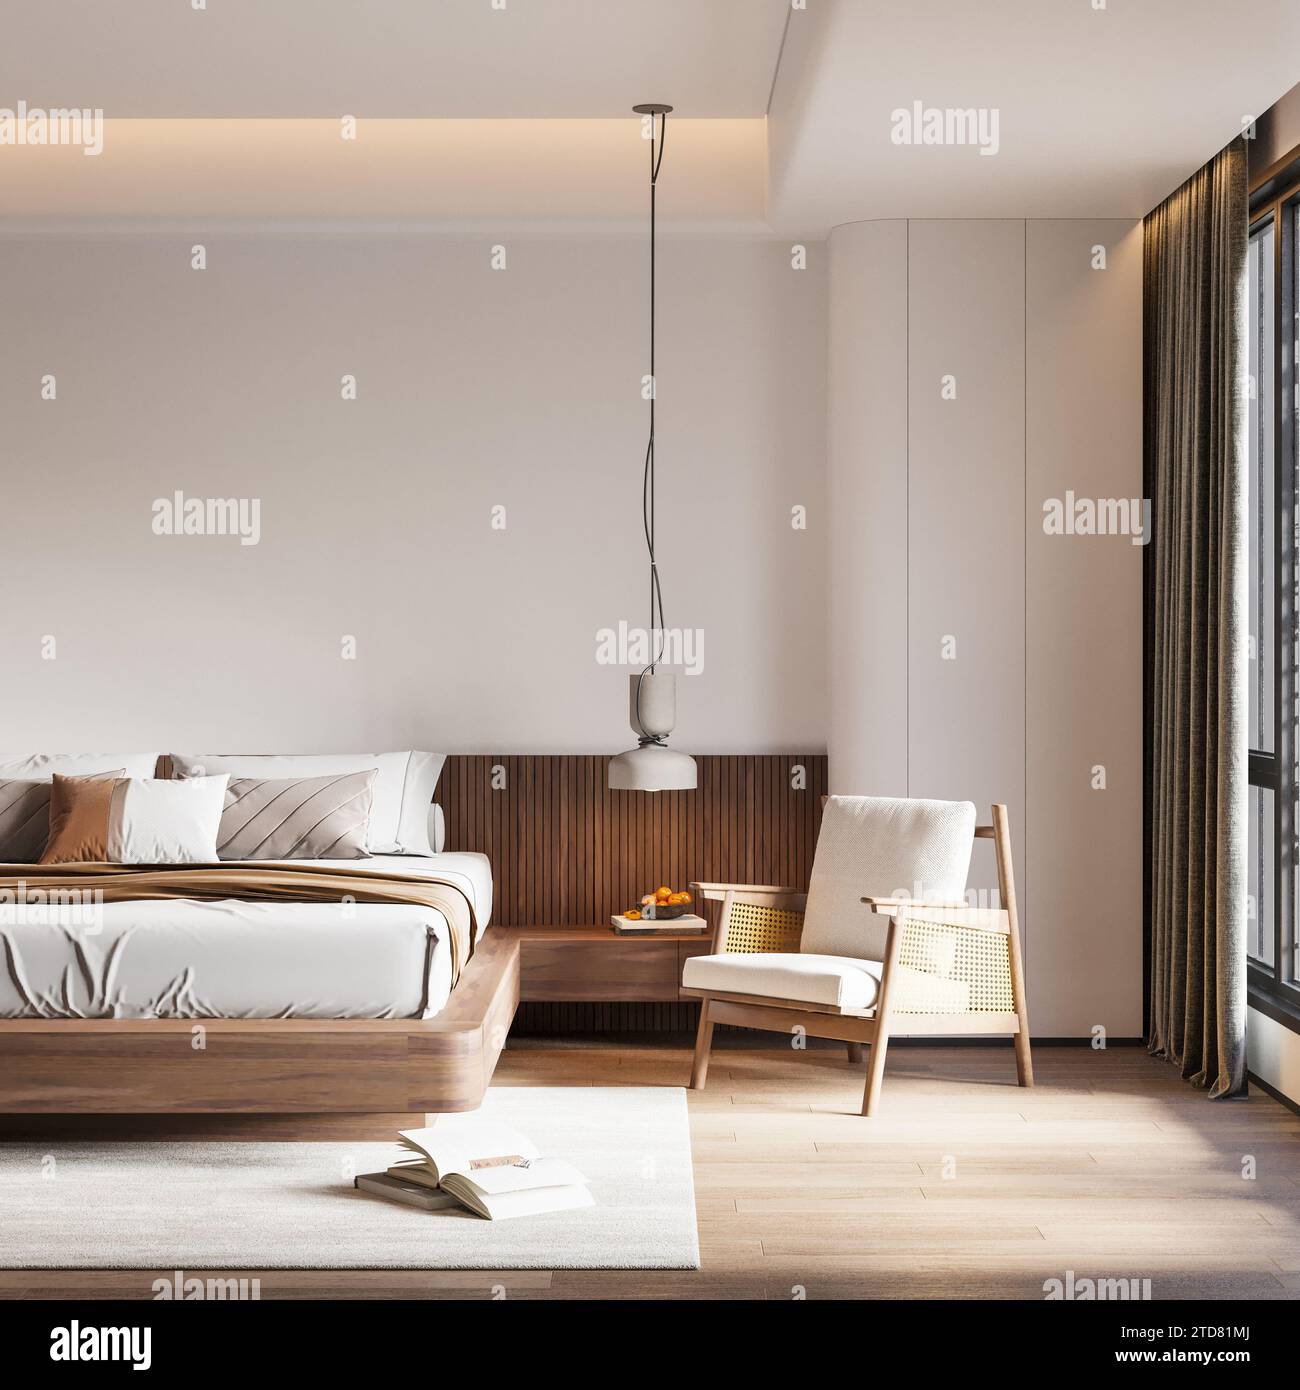 Wabi Sabi Interior Bedroom Wallpaper Mockup Stock Photo